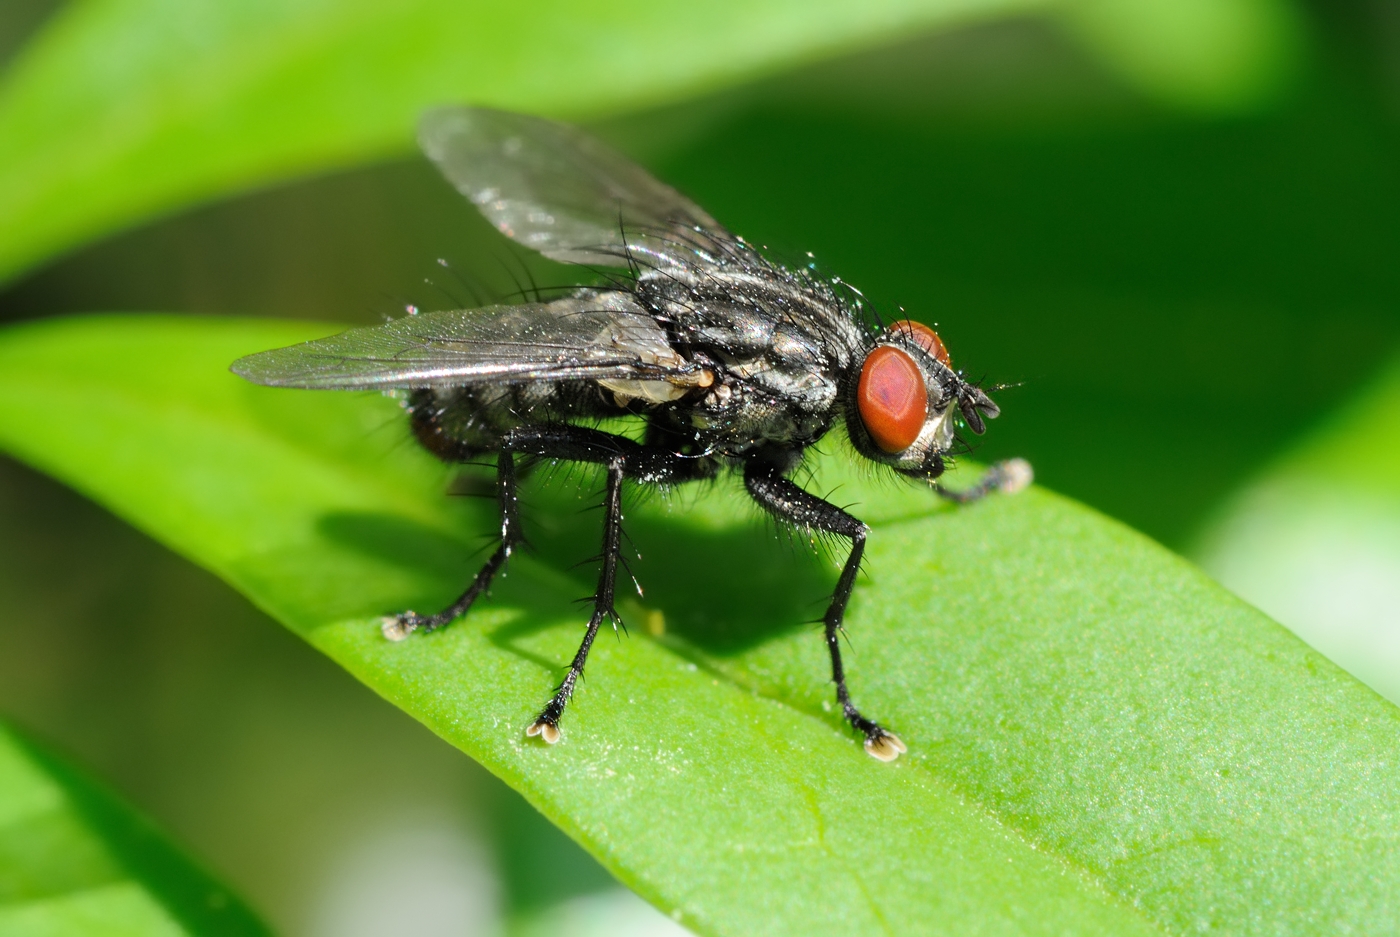 Flesh fly (Kdflue / Sarcophagidae sp.)